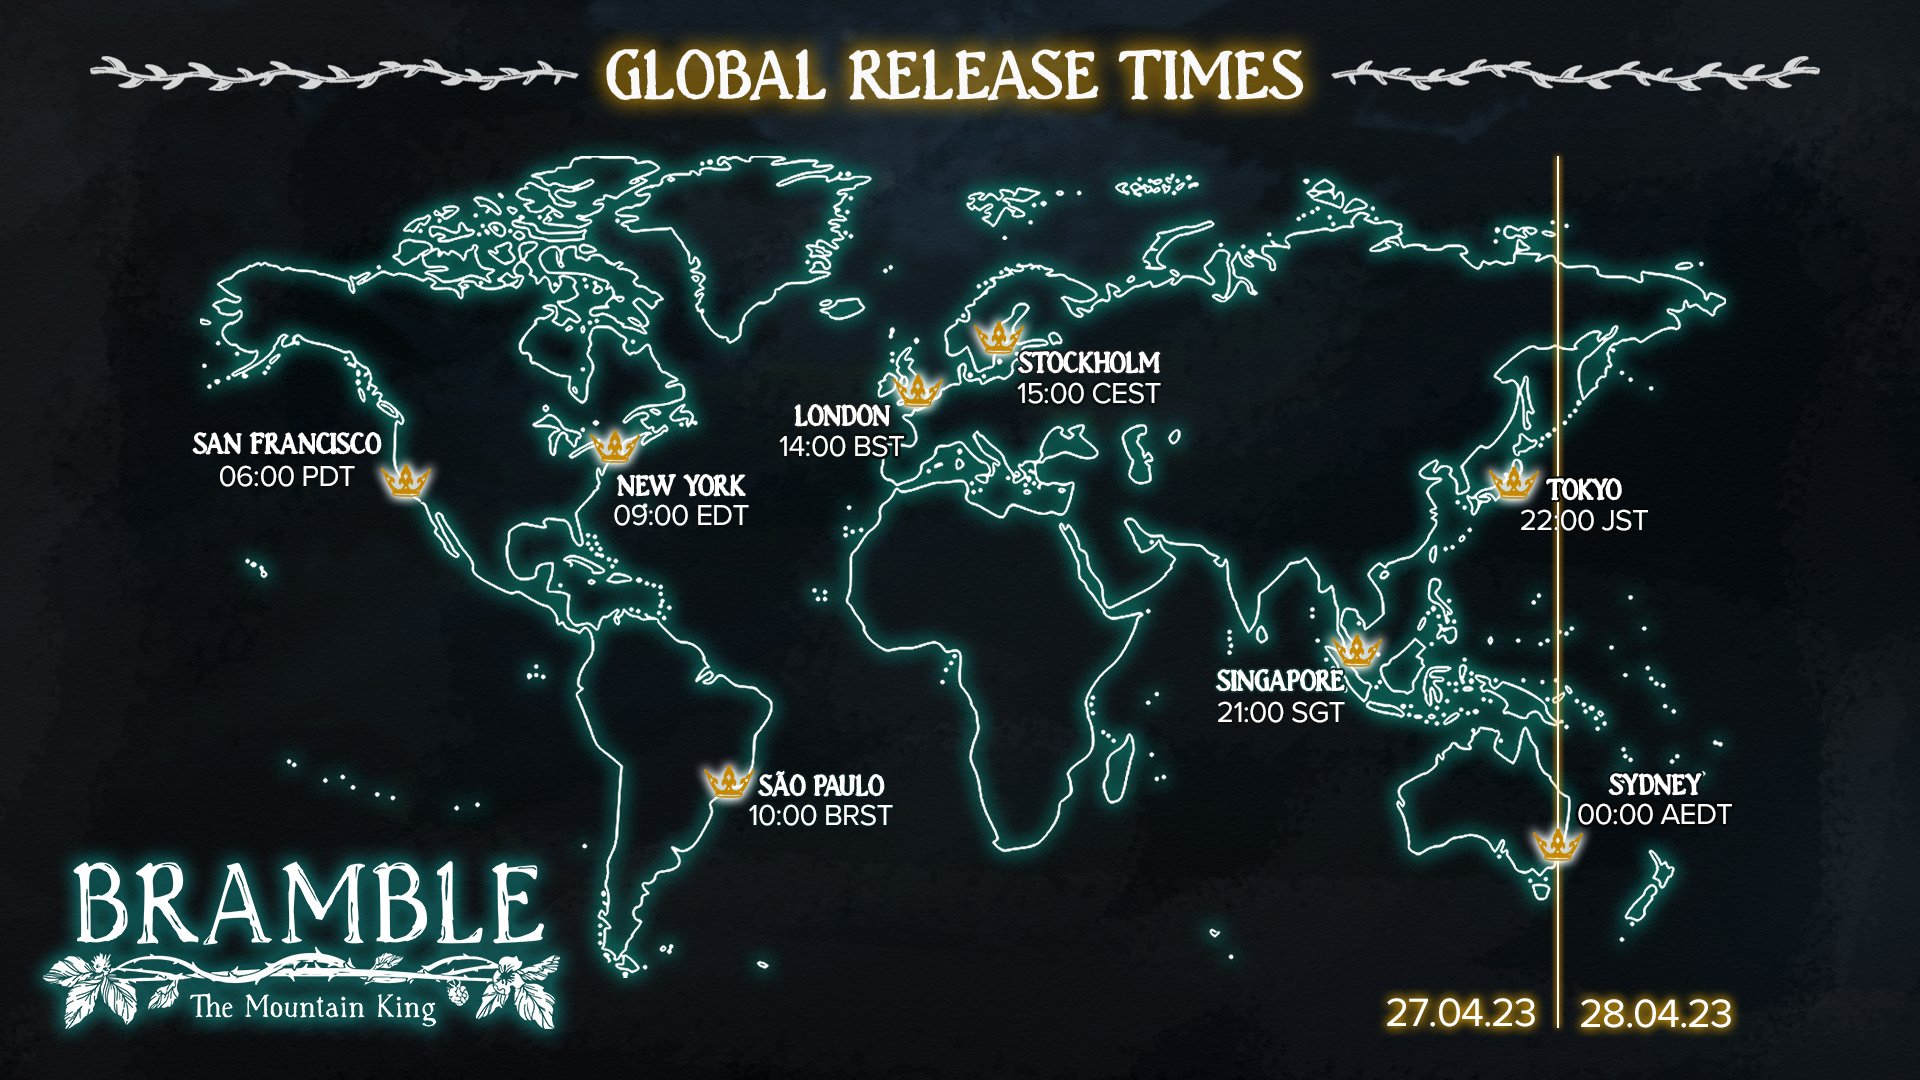 Bramble: The Mountain King Global Release Times